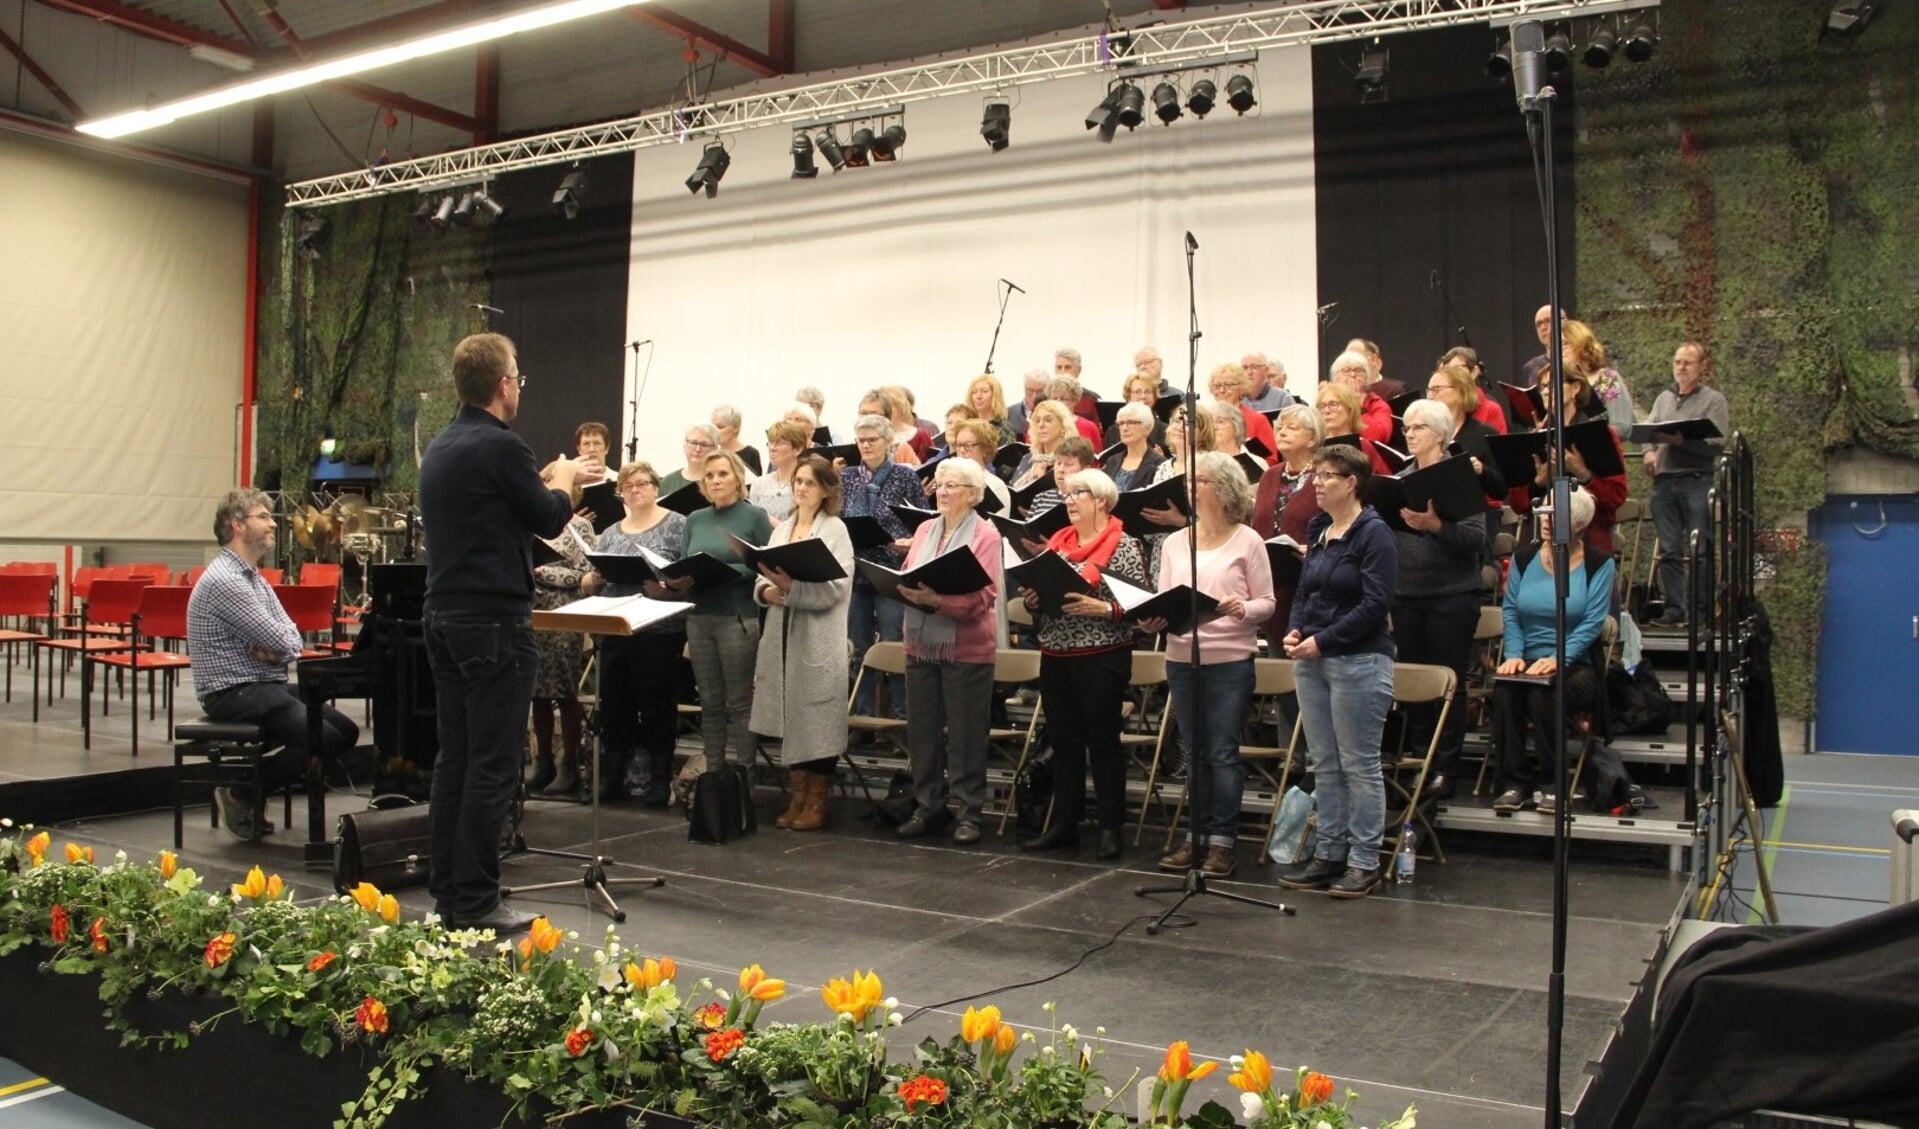 Uitvoering van het koor in de Millingse sporthal. (foto: Erik Hell)